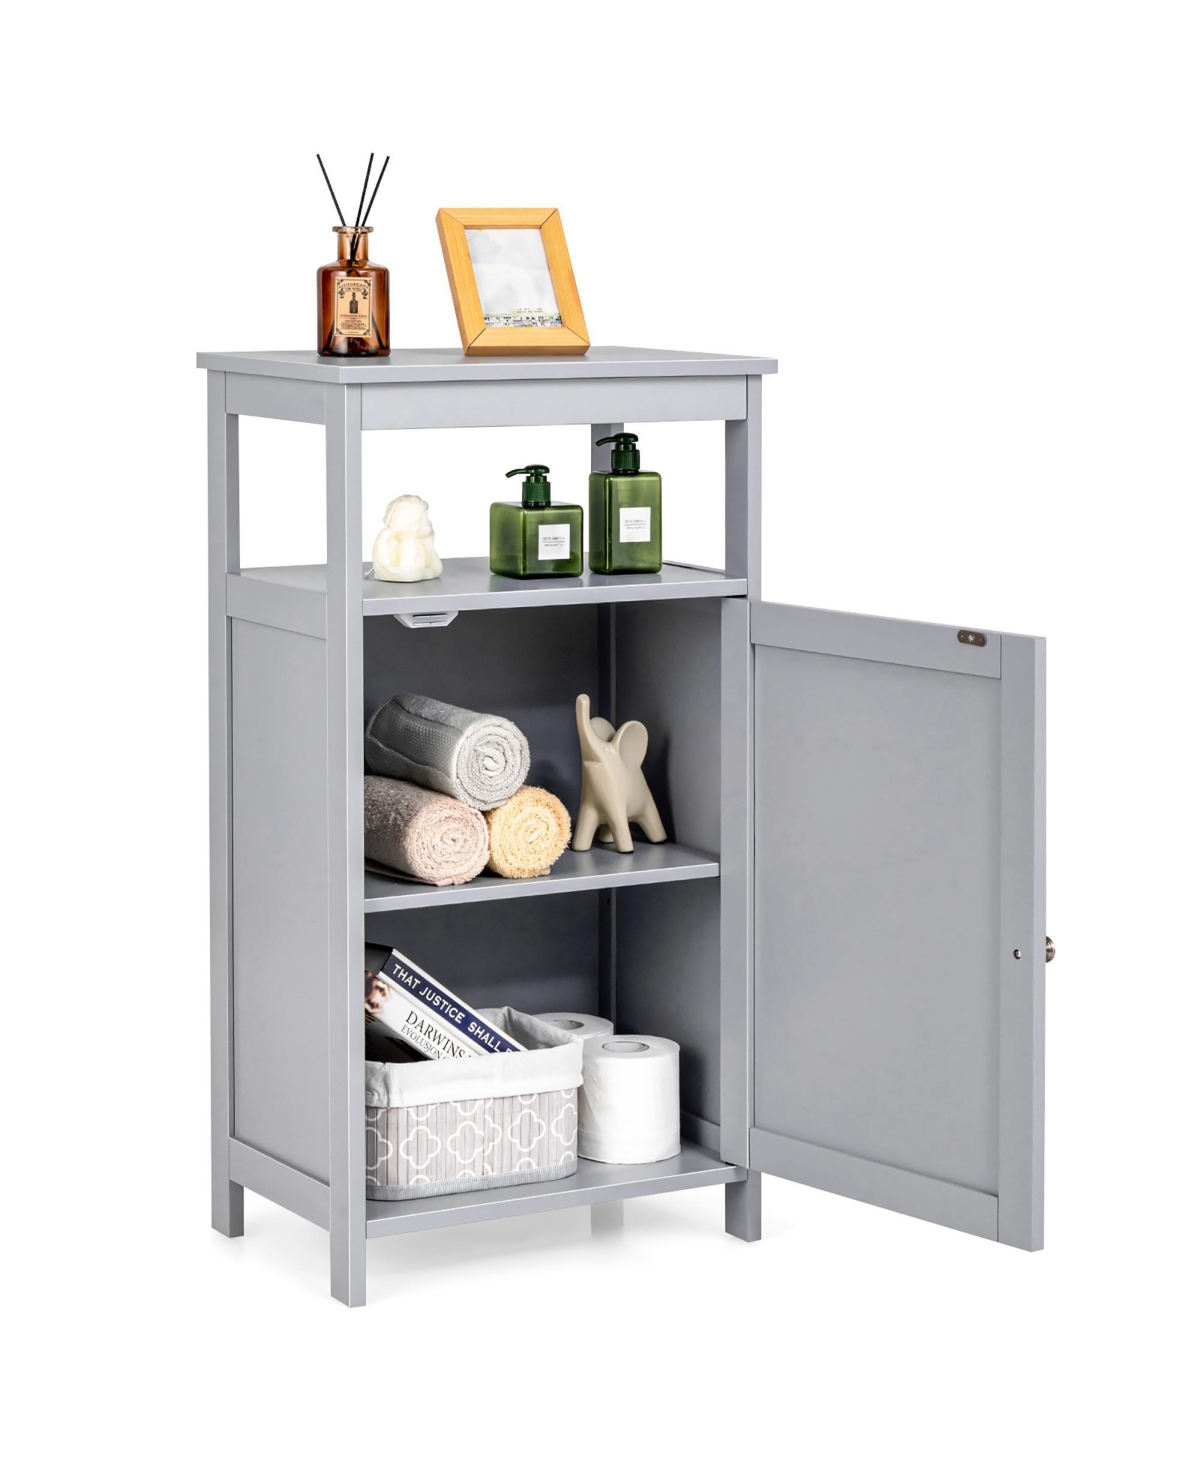 Bathroom Wooden Floor Cabinet Multifunction Storage Rack Organizer Stand - Grey